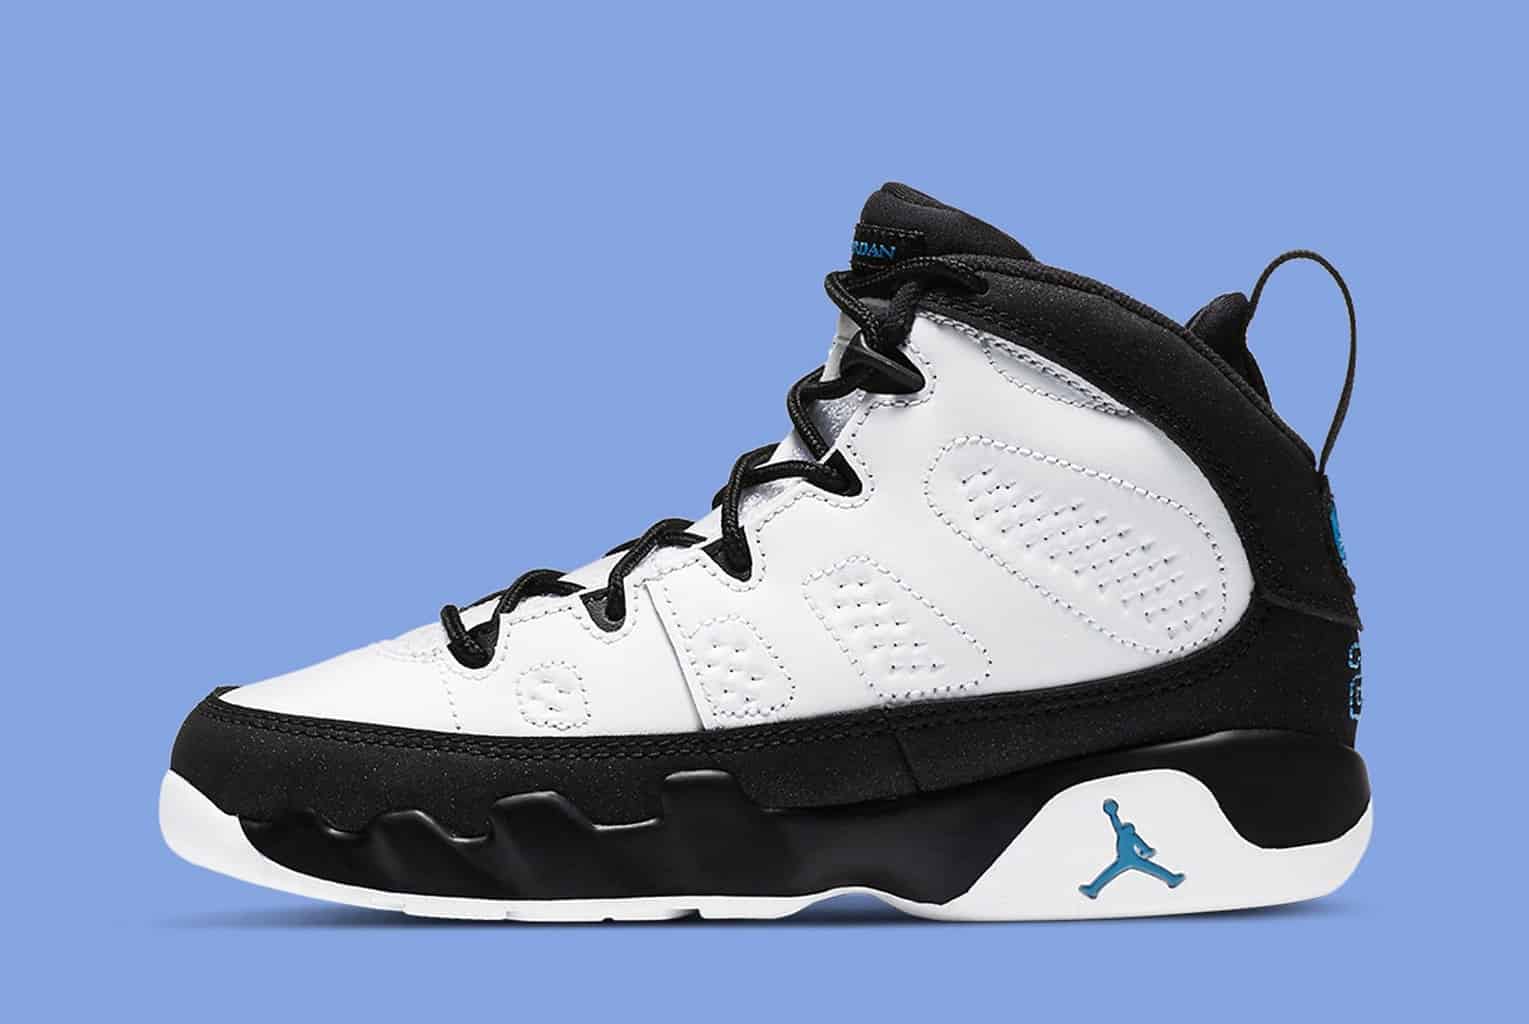 Air Jordan "Varsity Blue" Sneakers